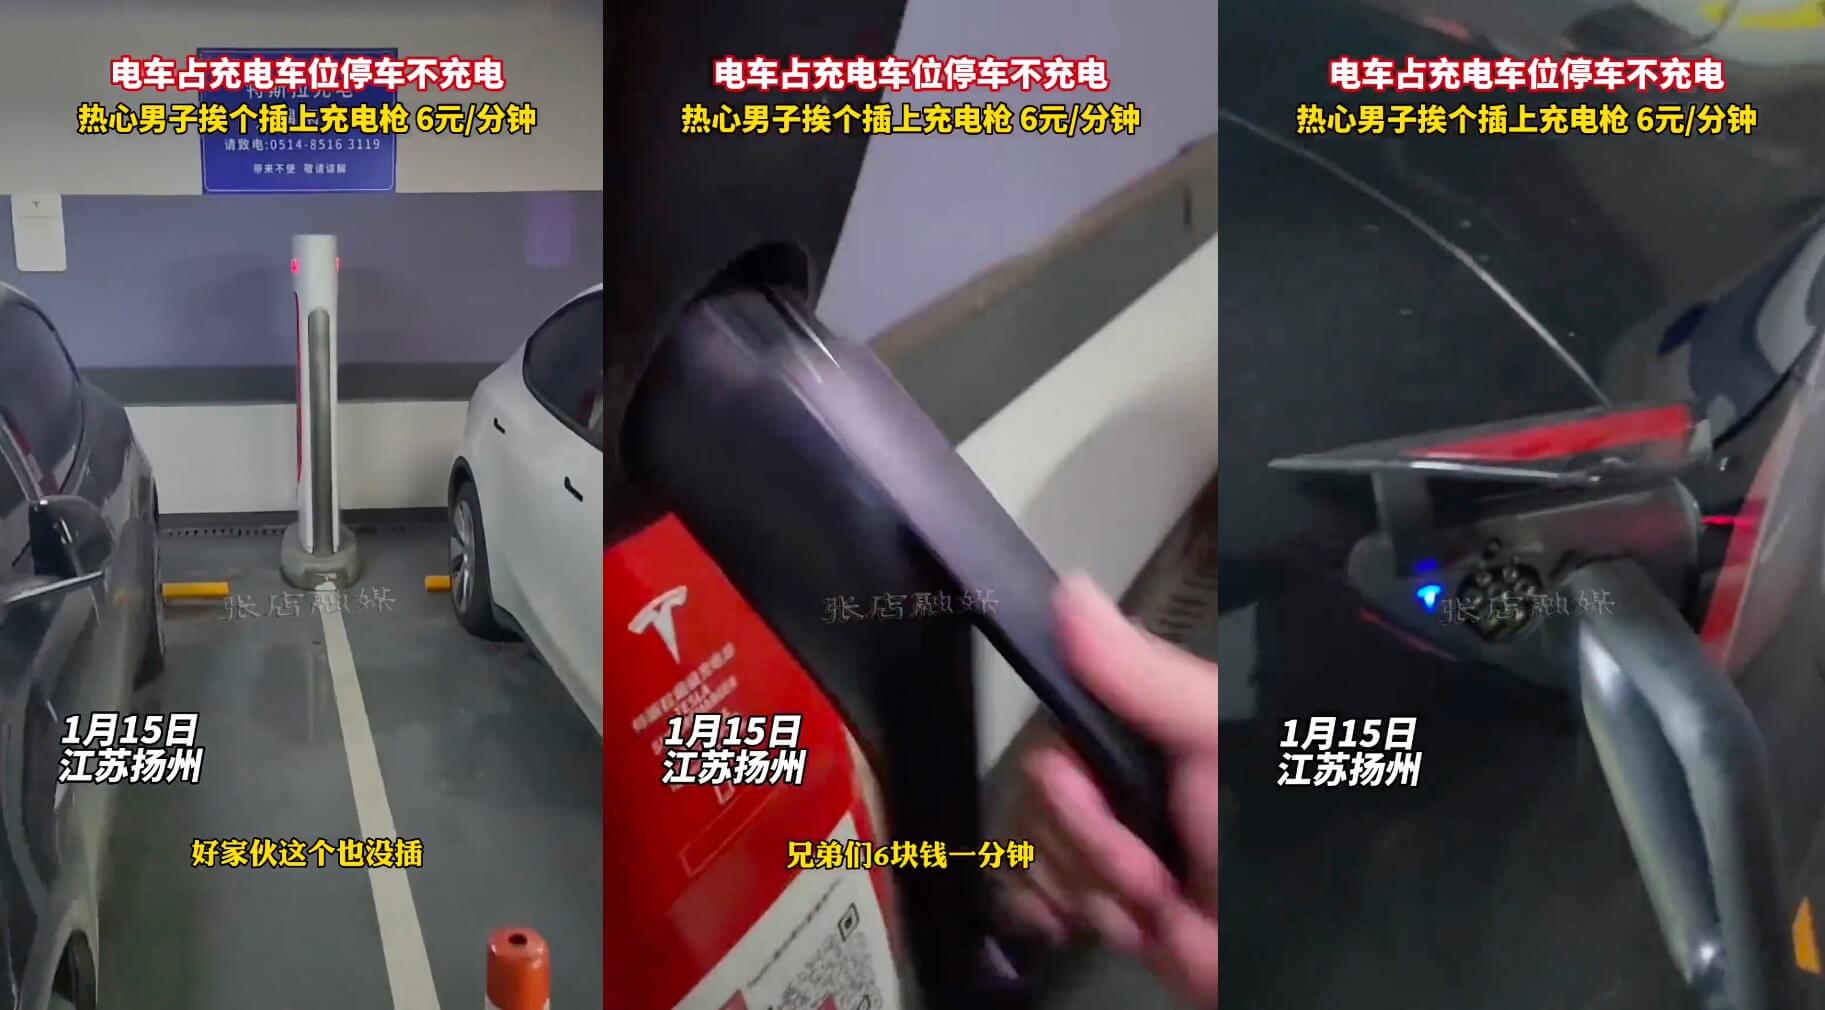 Tesla Supercharger vigilante 对中国的“EVholes”进行闲置费报复